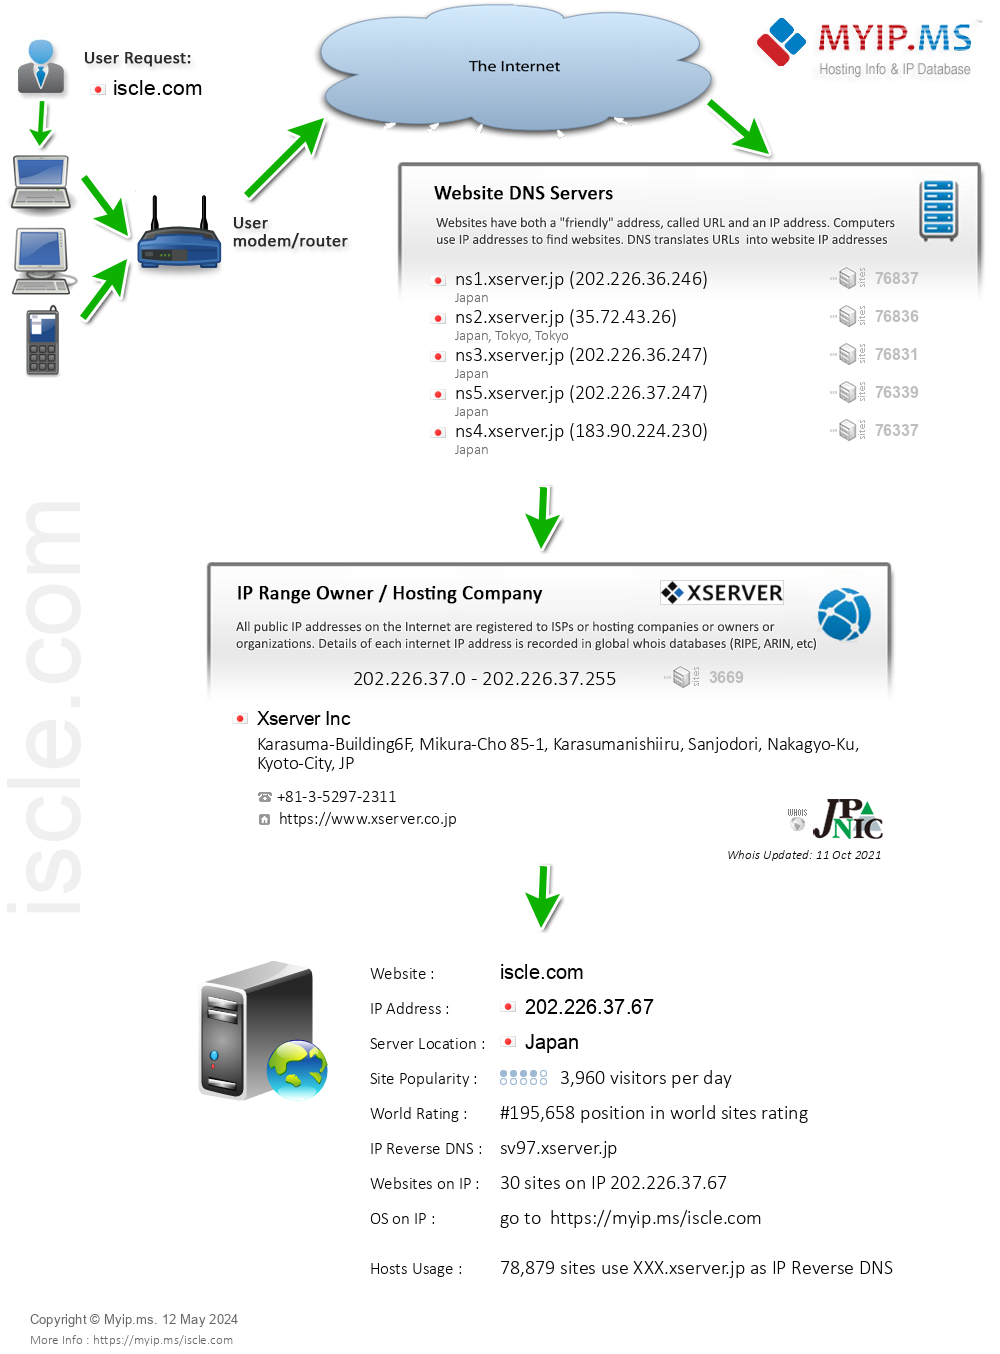 Iscle.com - Website Hosting Visual IP Diagram